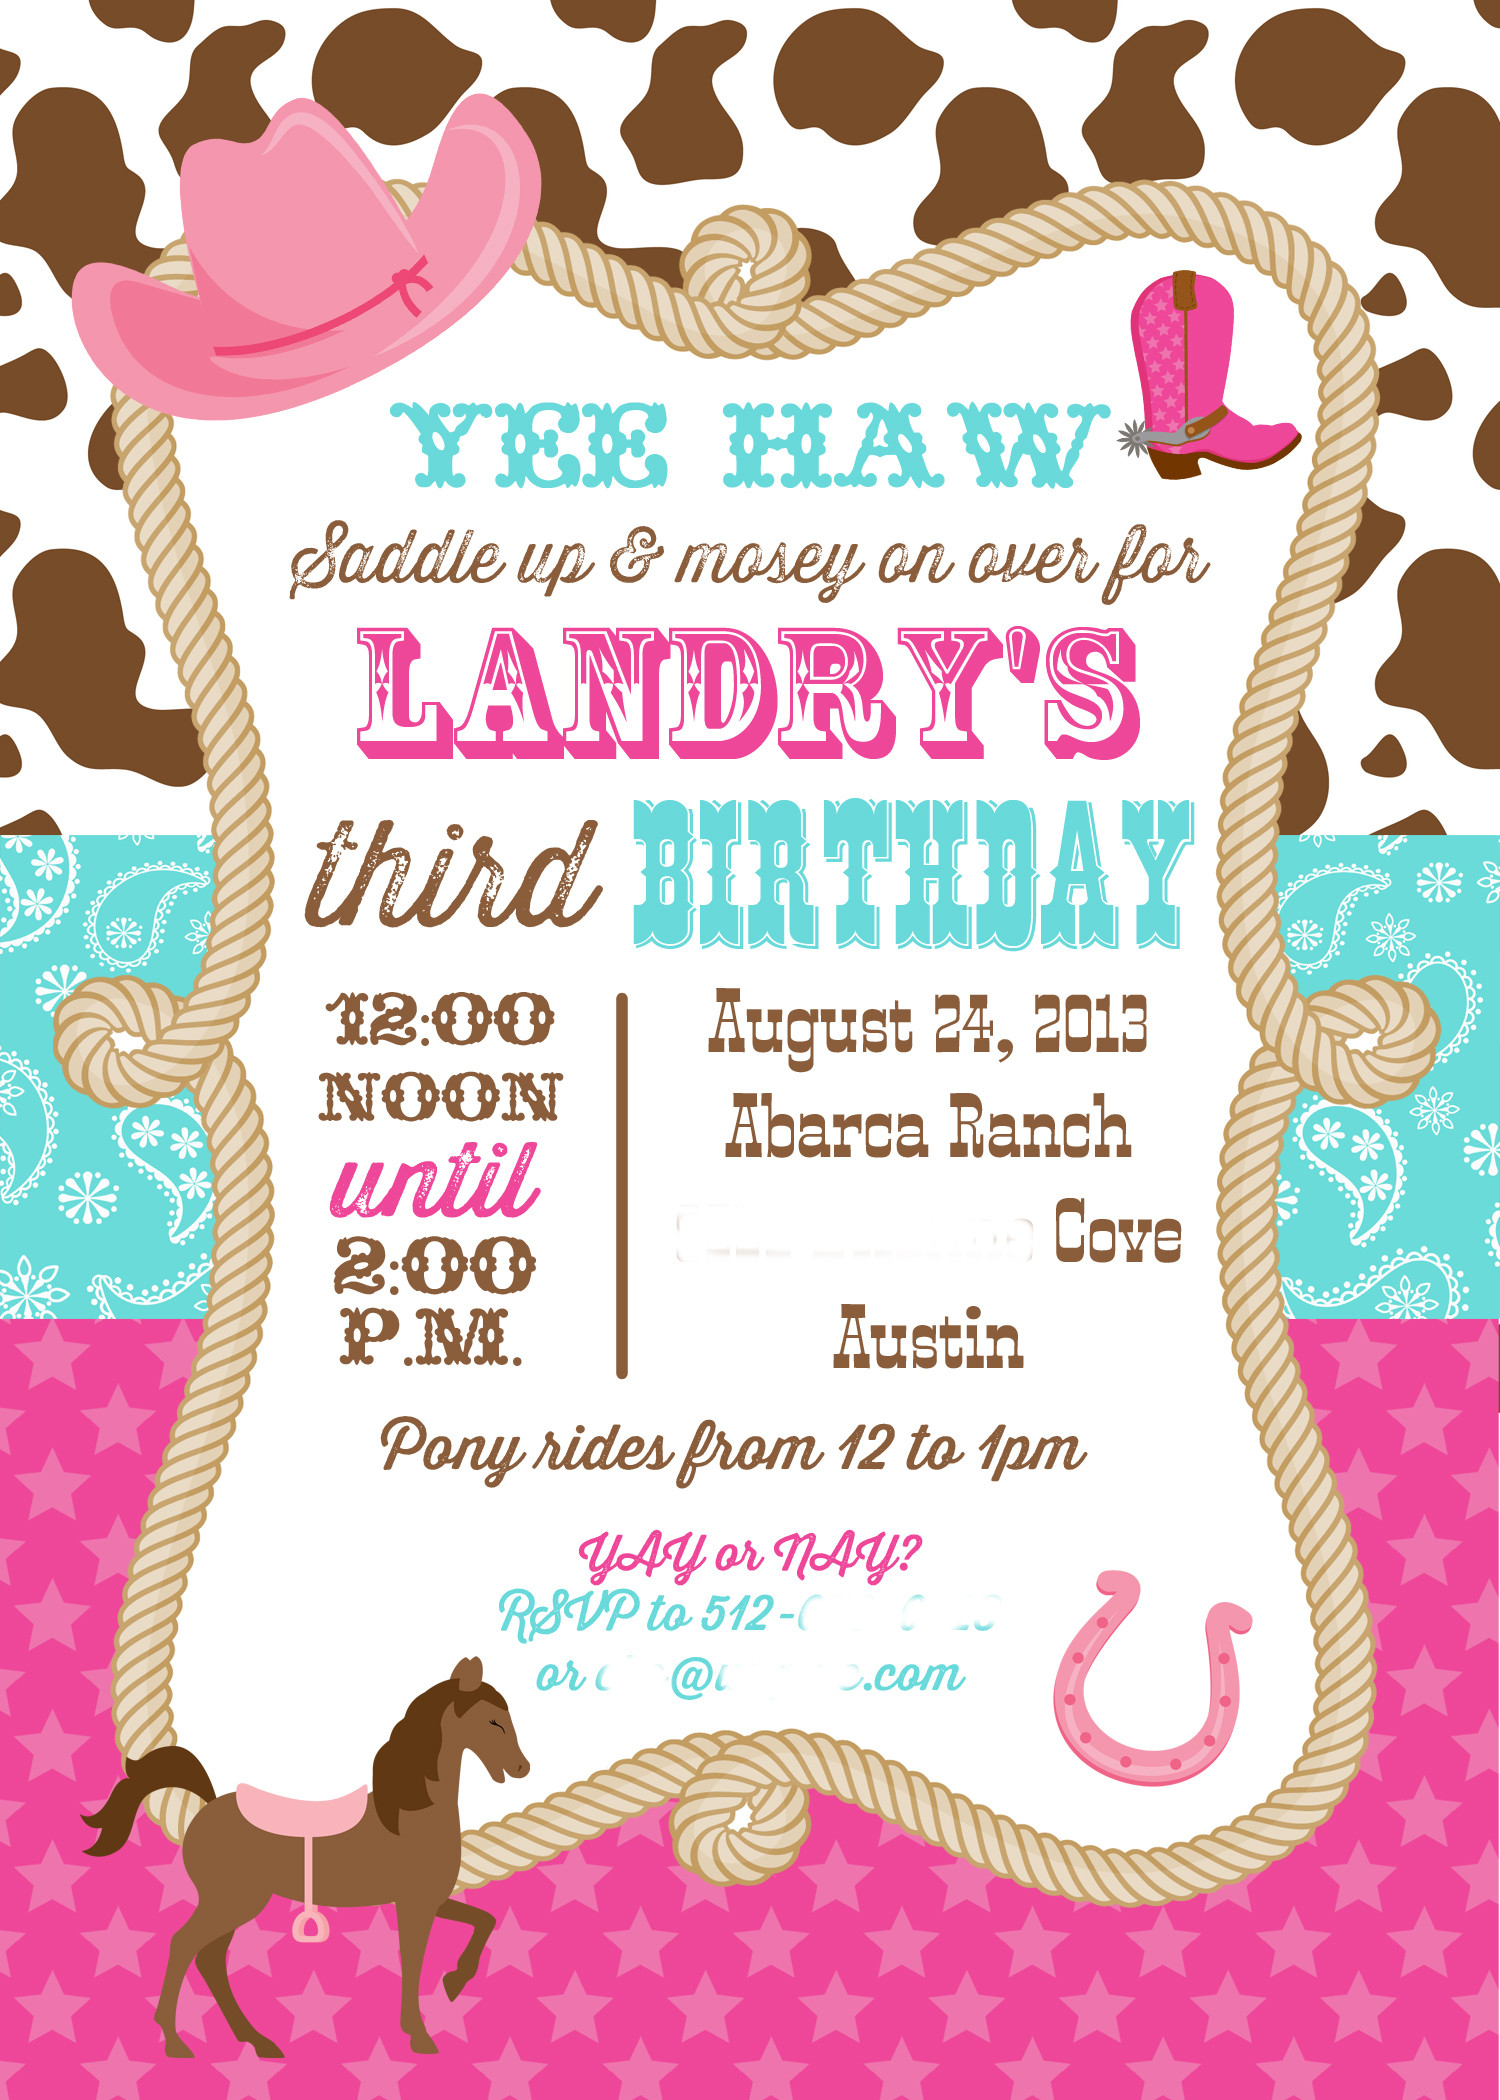 Birthday Invitations Ideas
 Landry’s Cowgirl 3rd Birthday Party